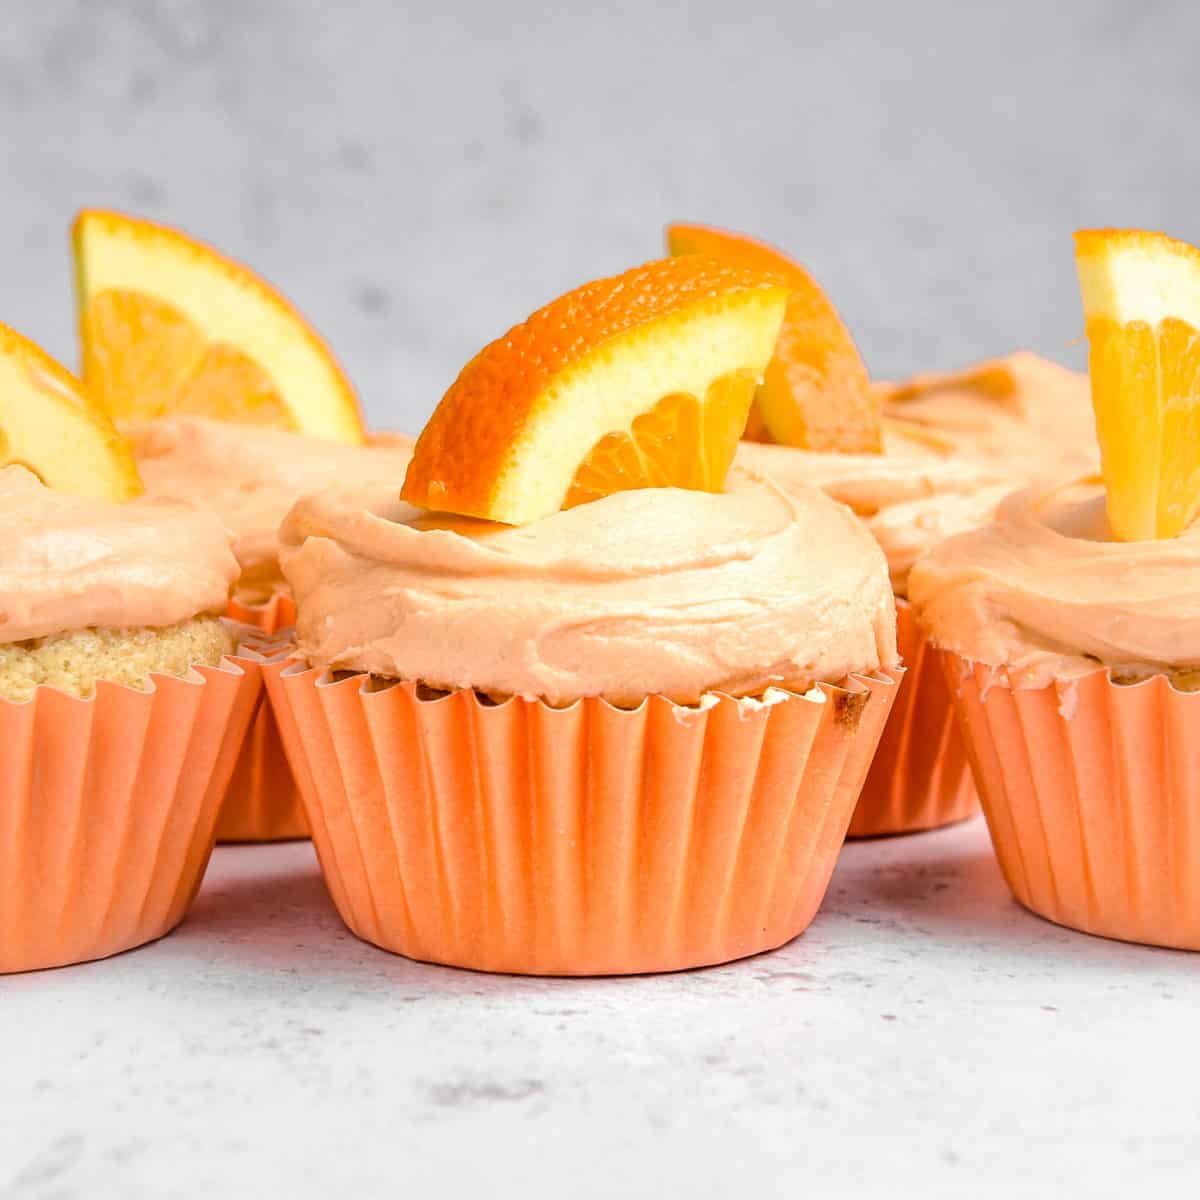 Orange cupcakes with a slice of orange on top.